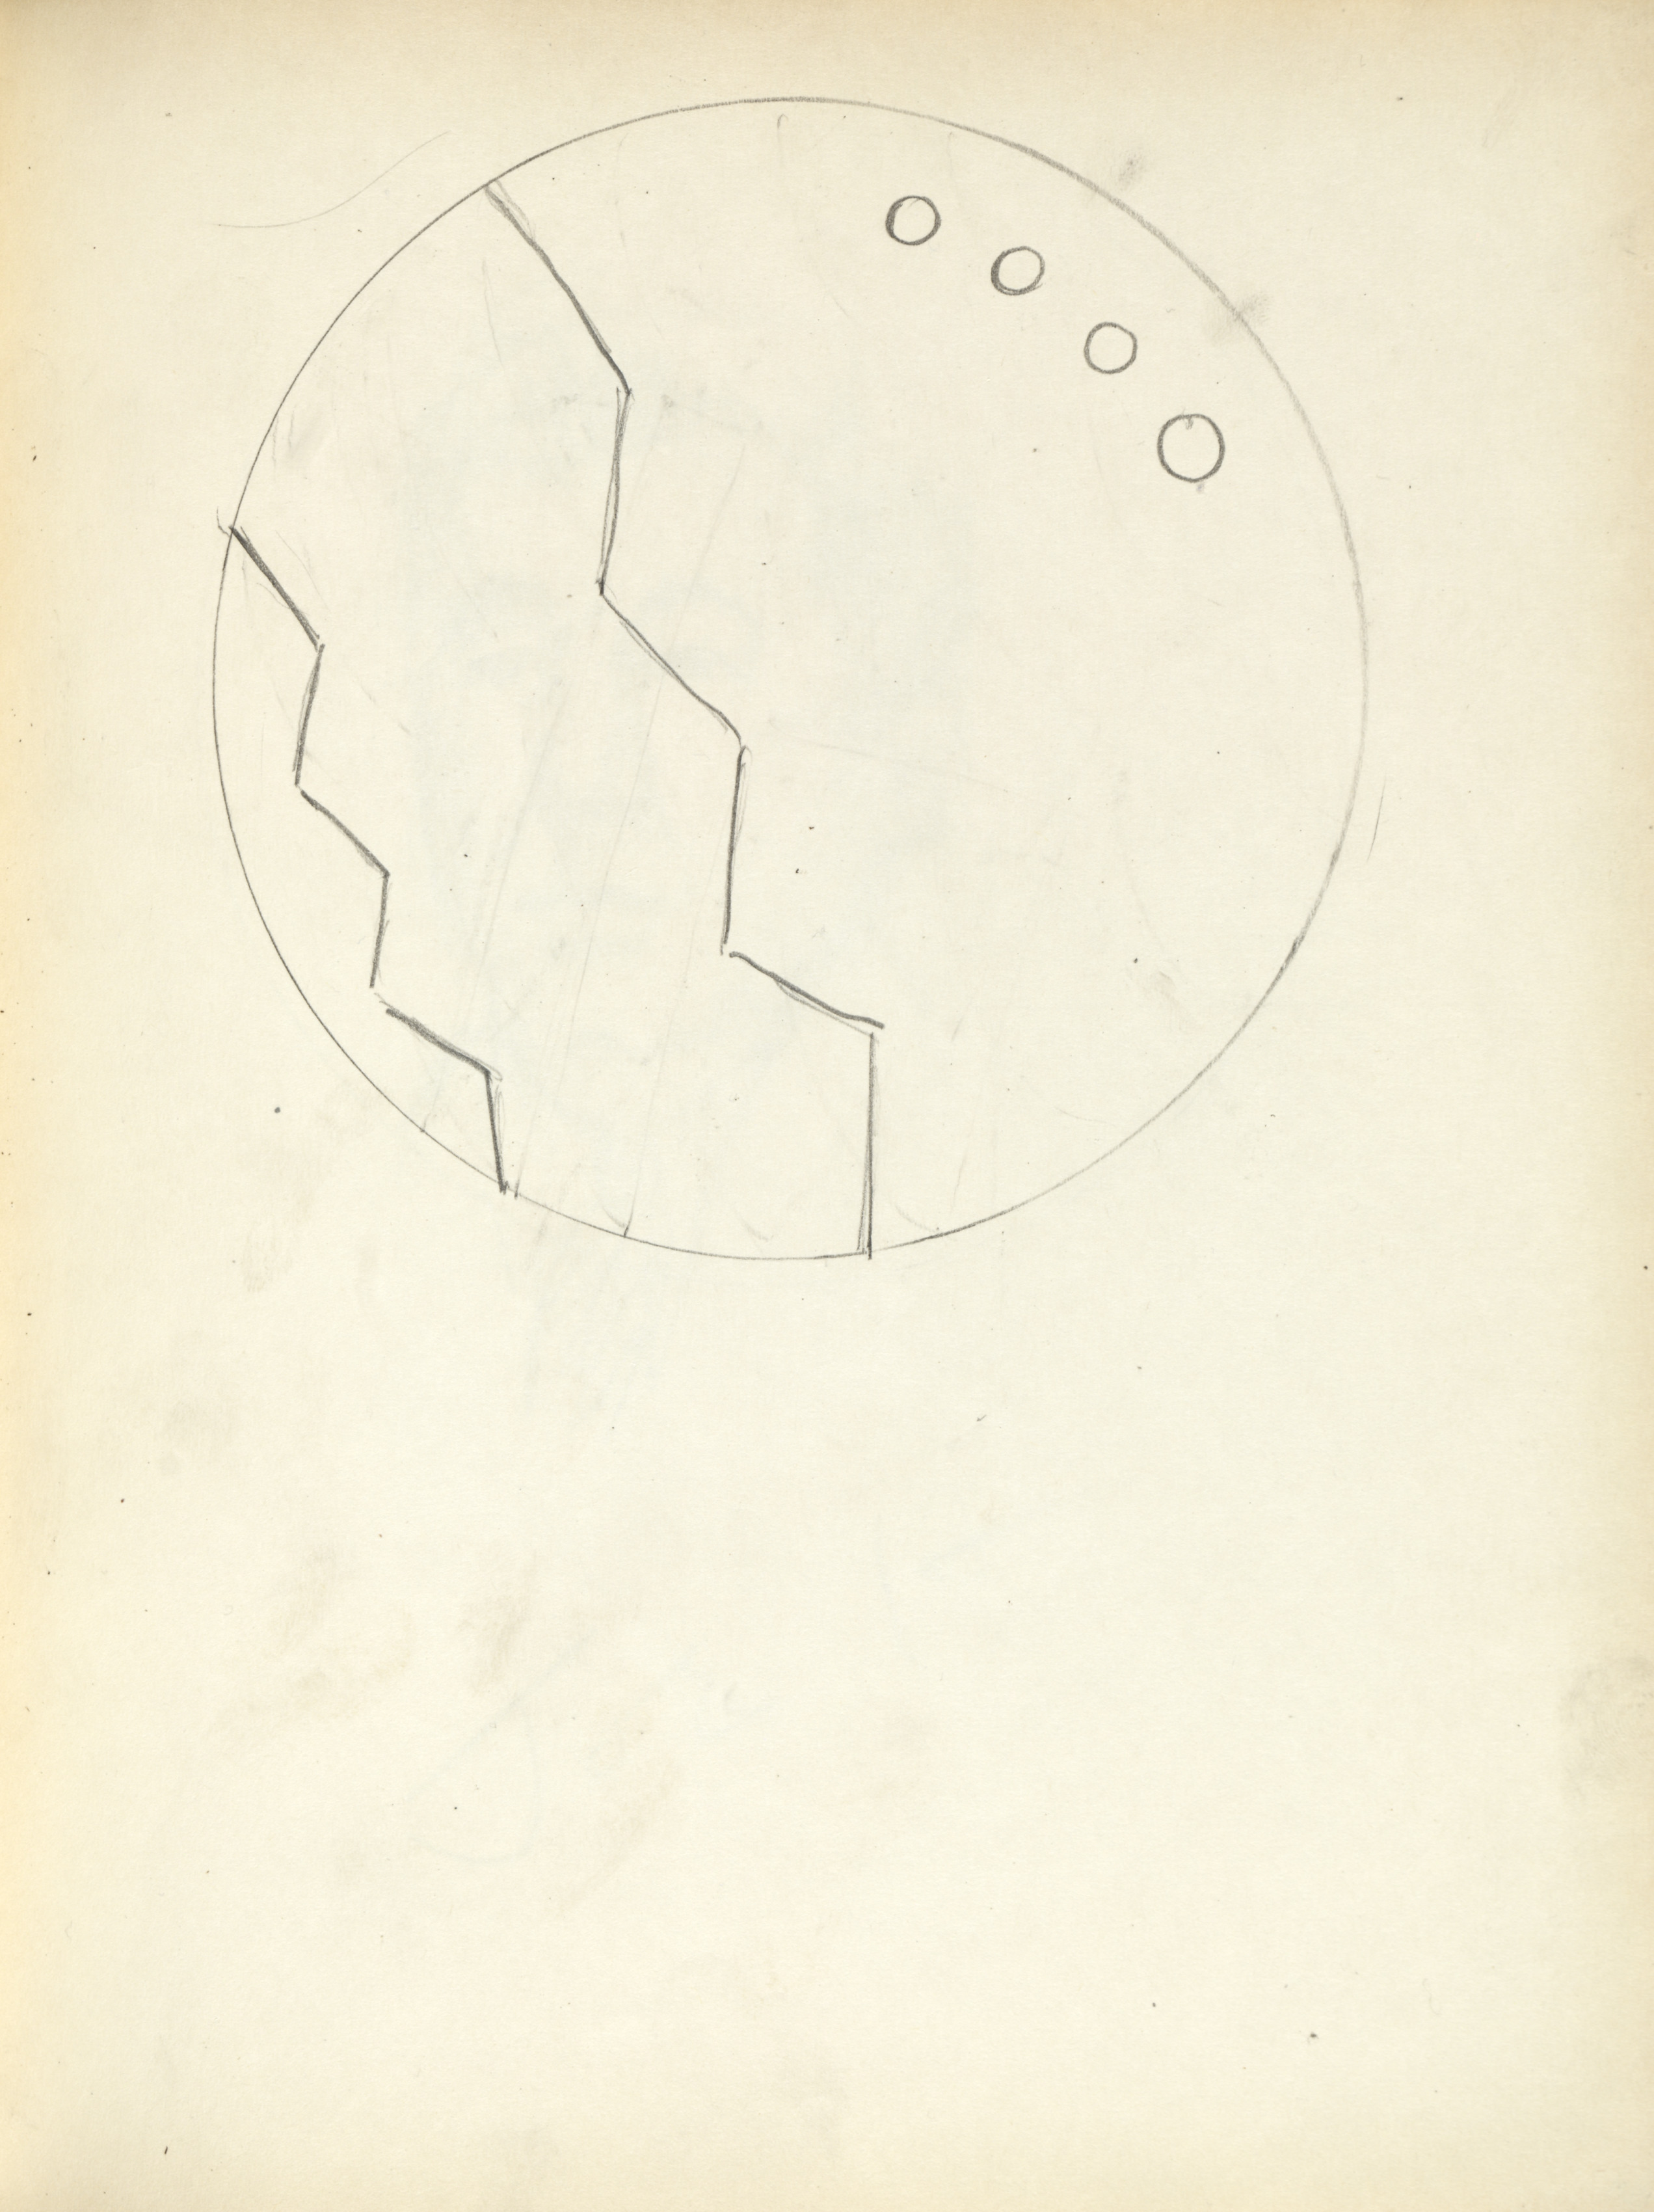 Sketchbook #1: Circle design (page 123)